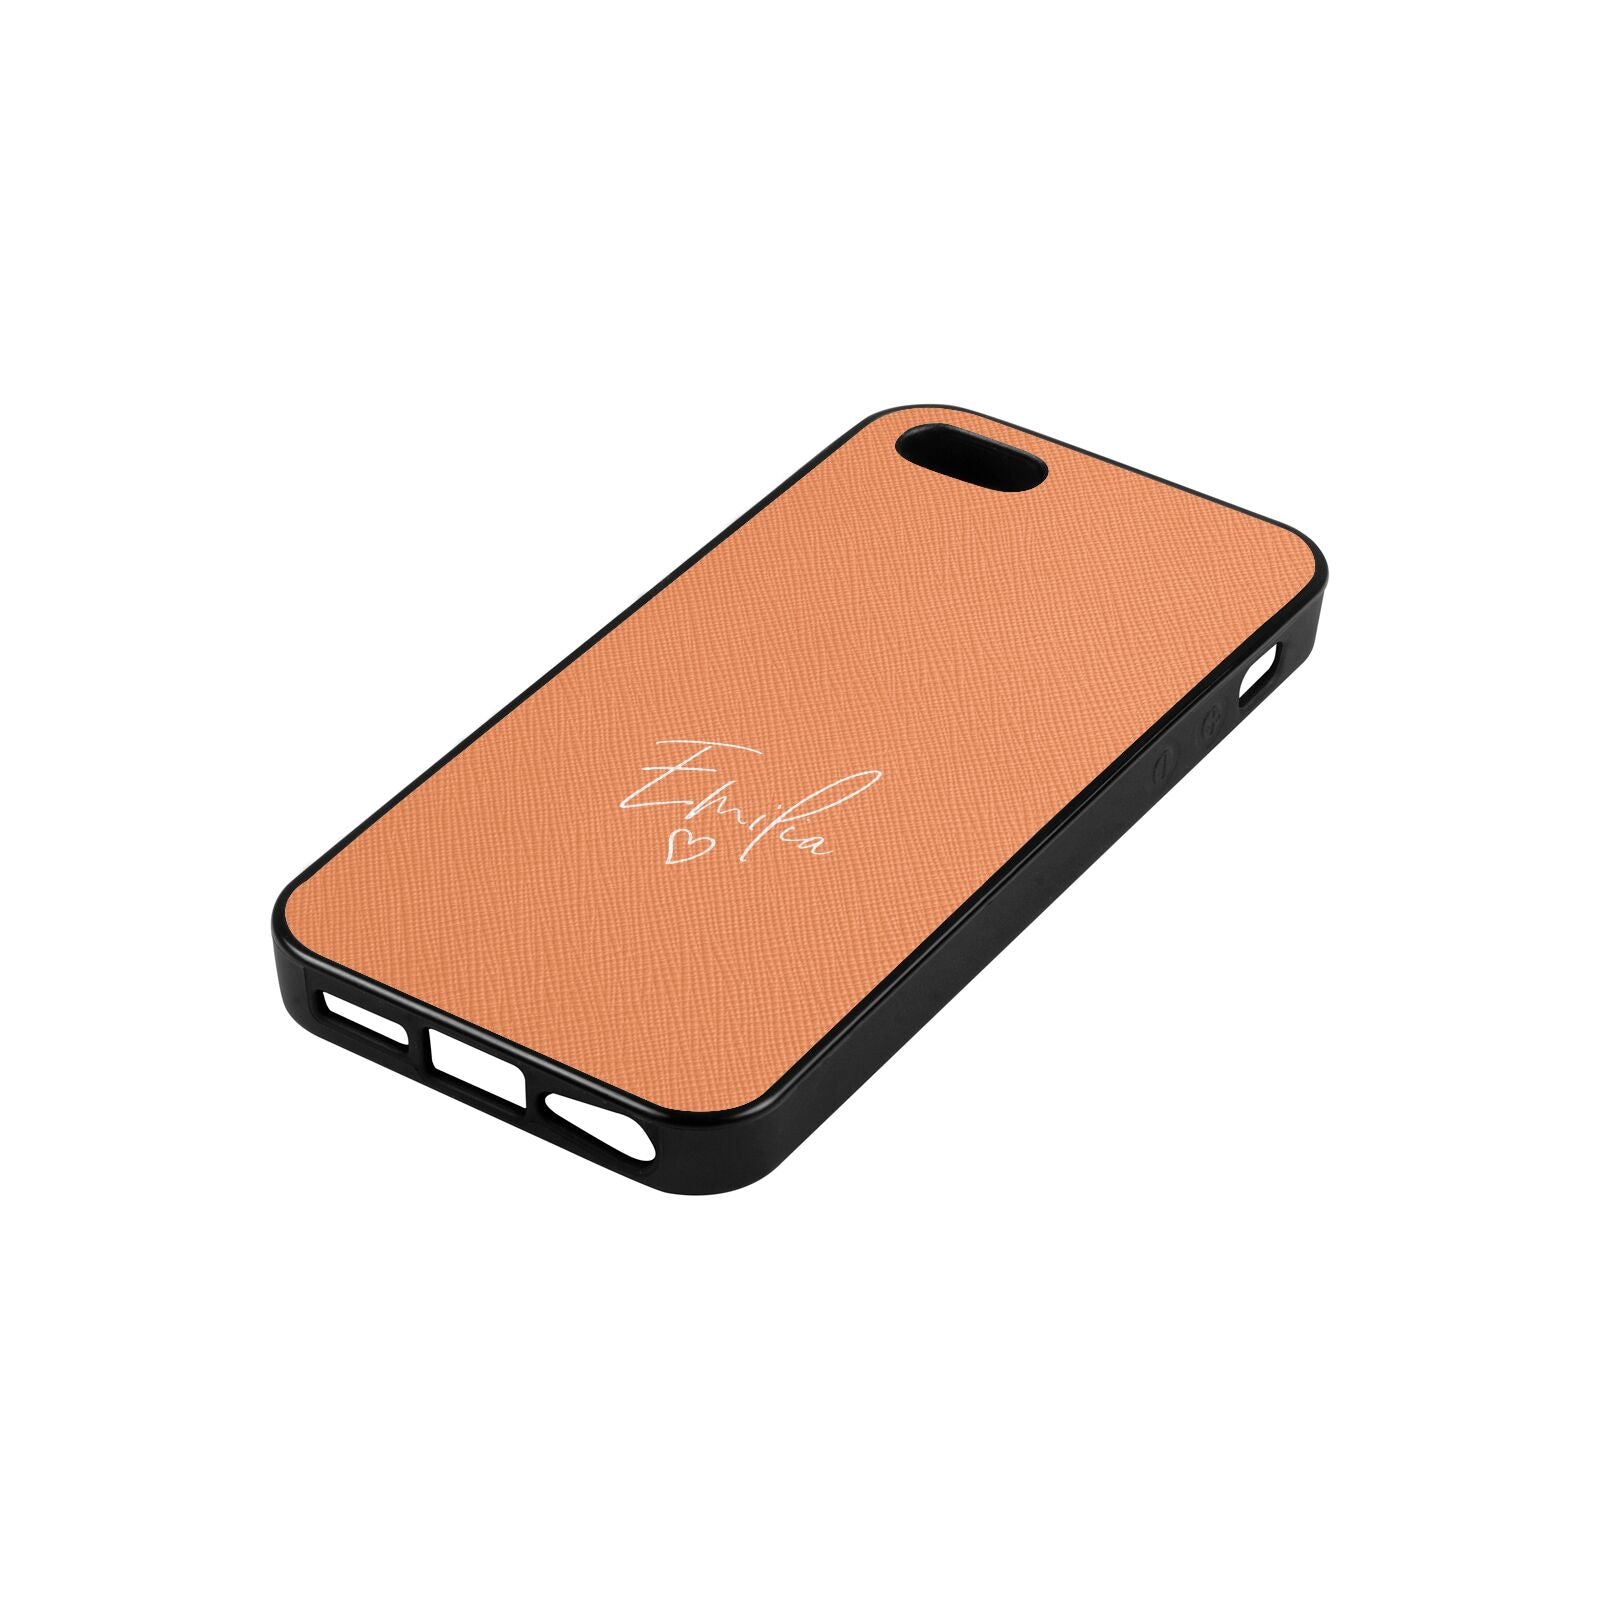 White Handwritten Name Transparent Orange Saffiano Leather iPhone 5 Case Side Angle